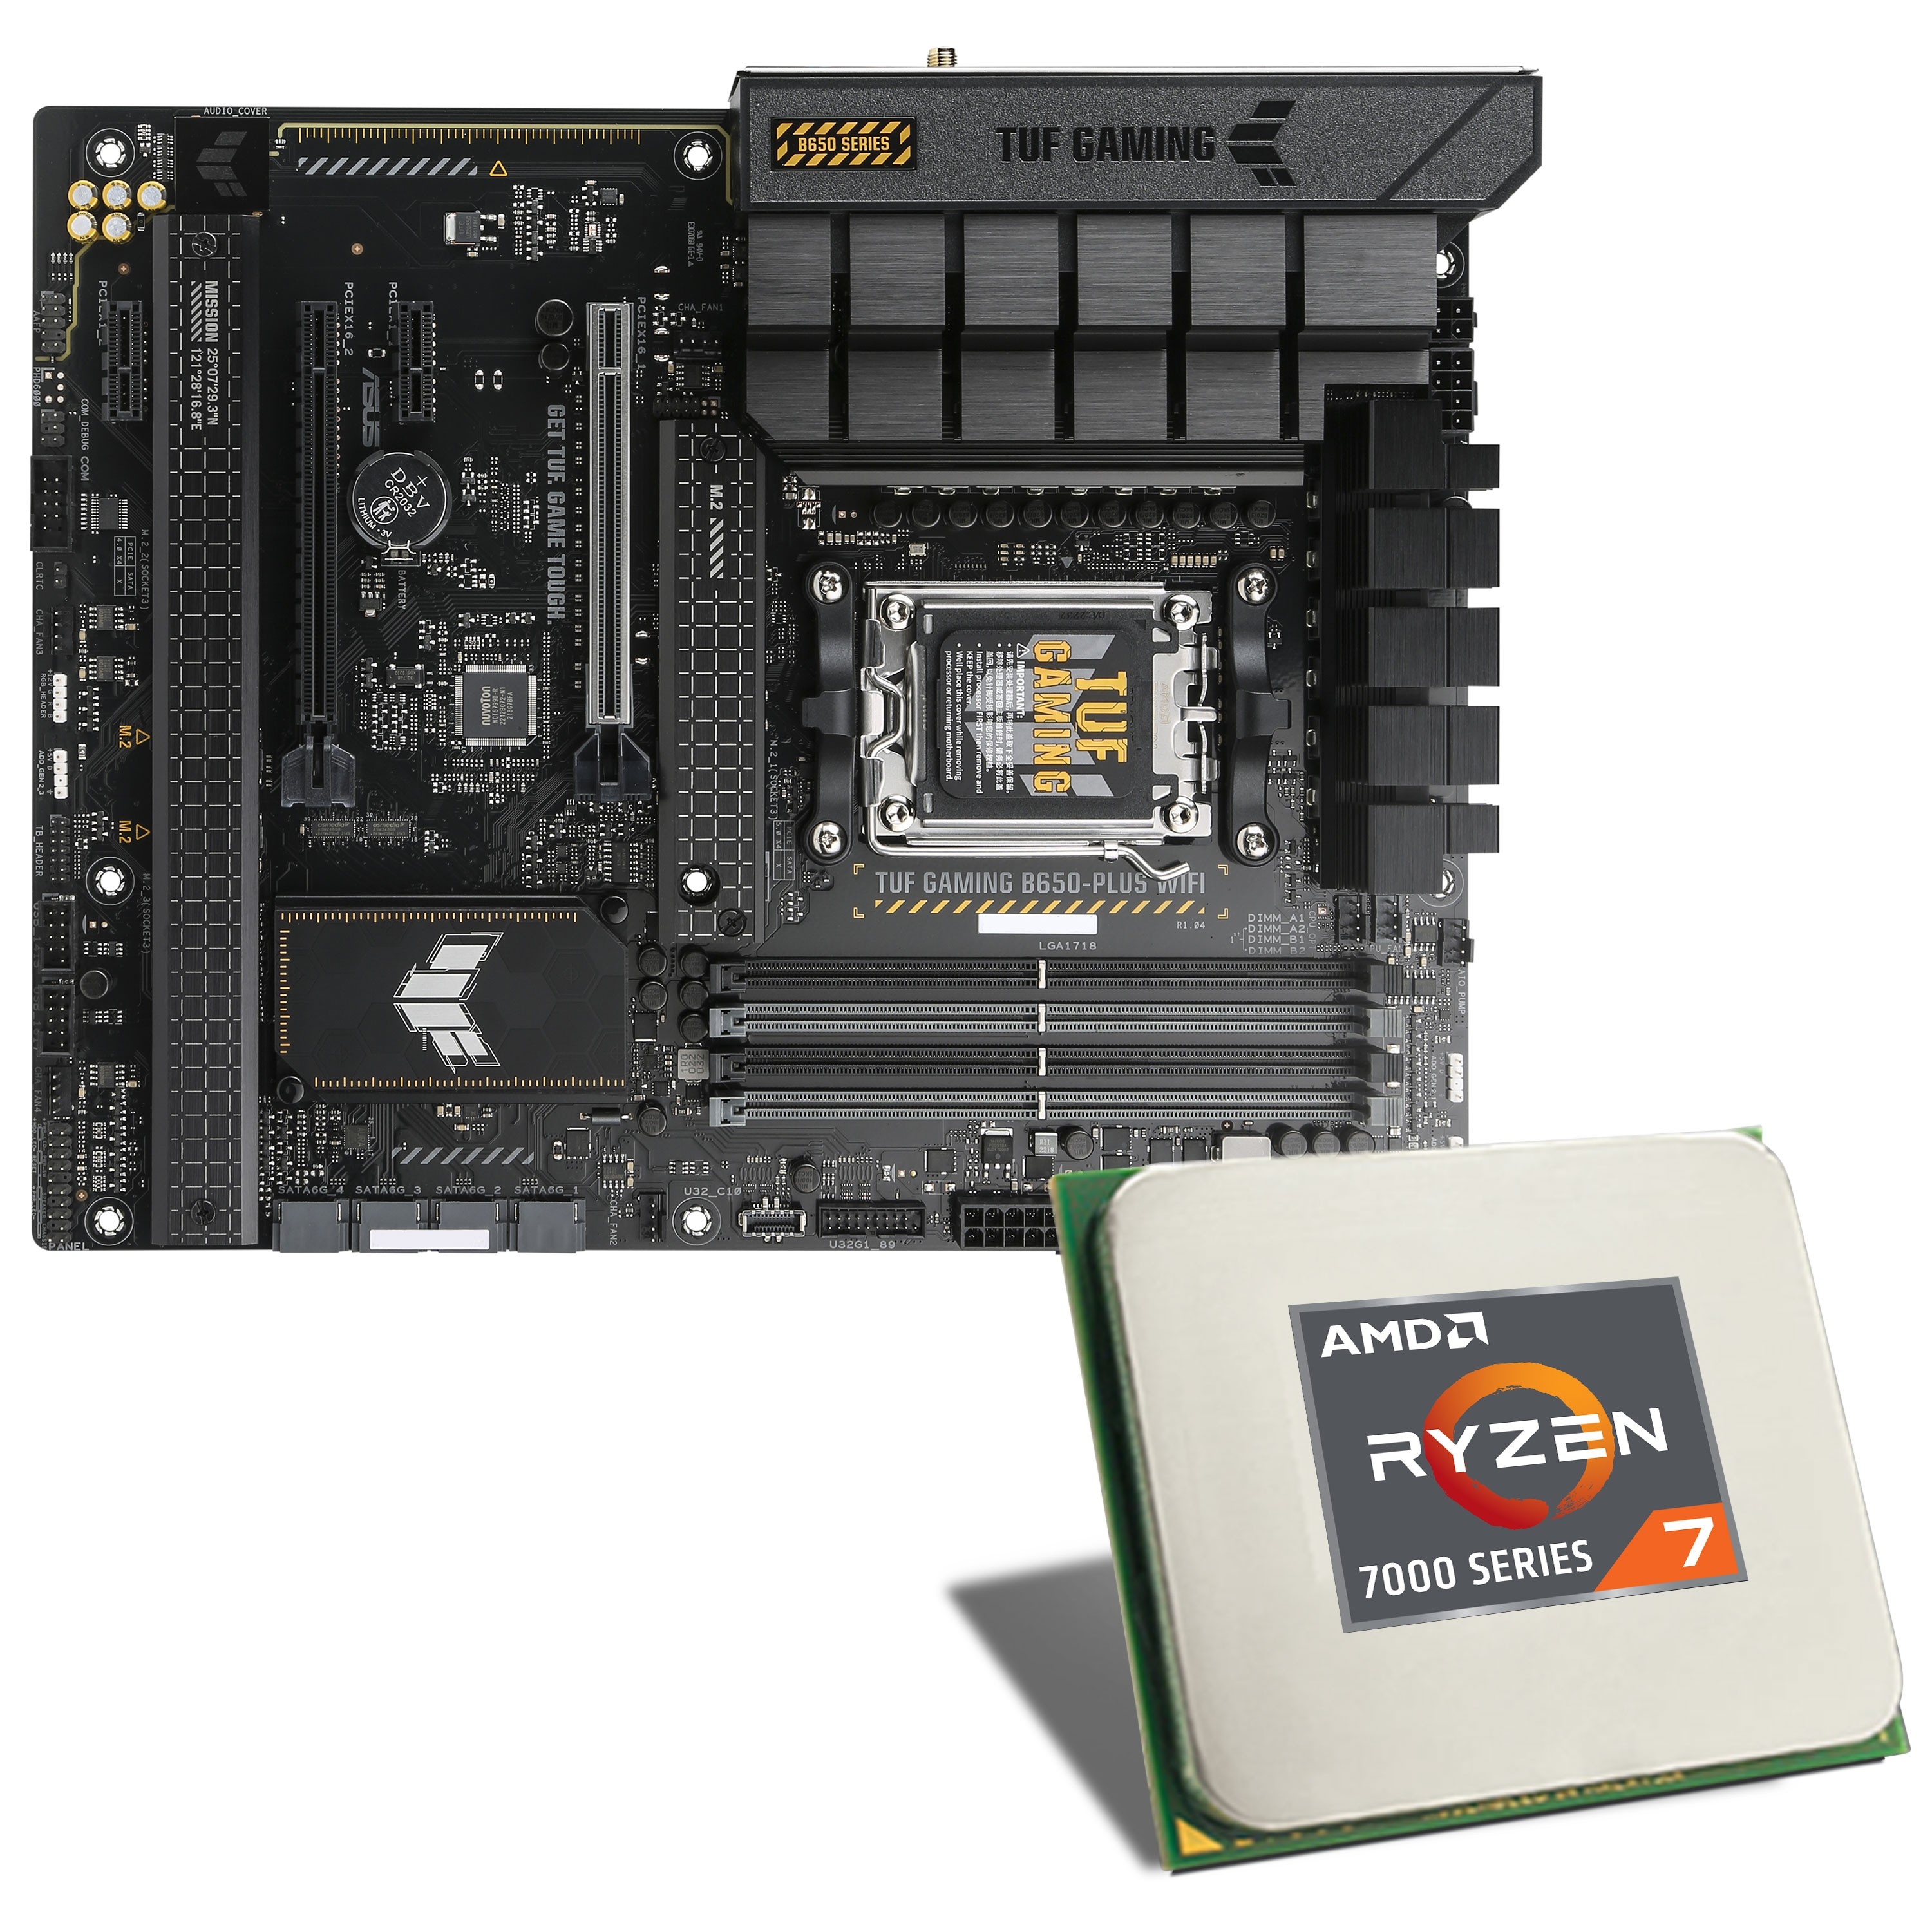 Overclocker Takes AMD's Ryzen 7 7800X3D to 5.4 GHz on Launch Day